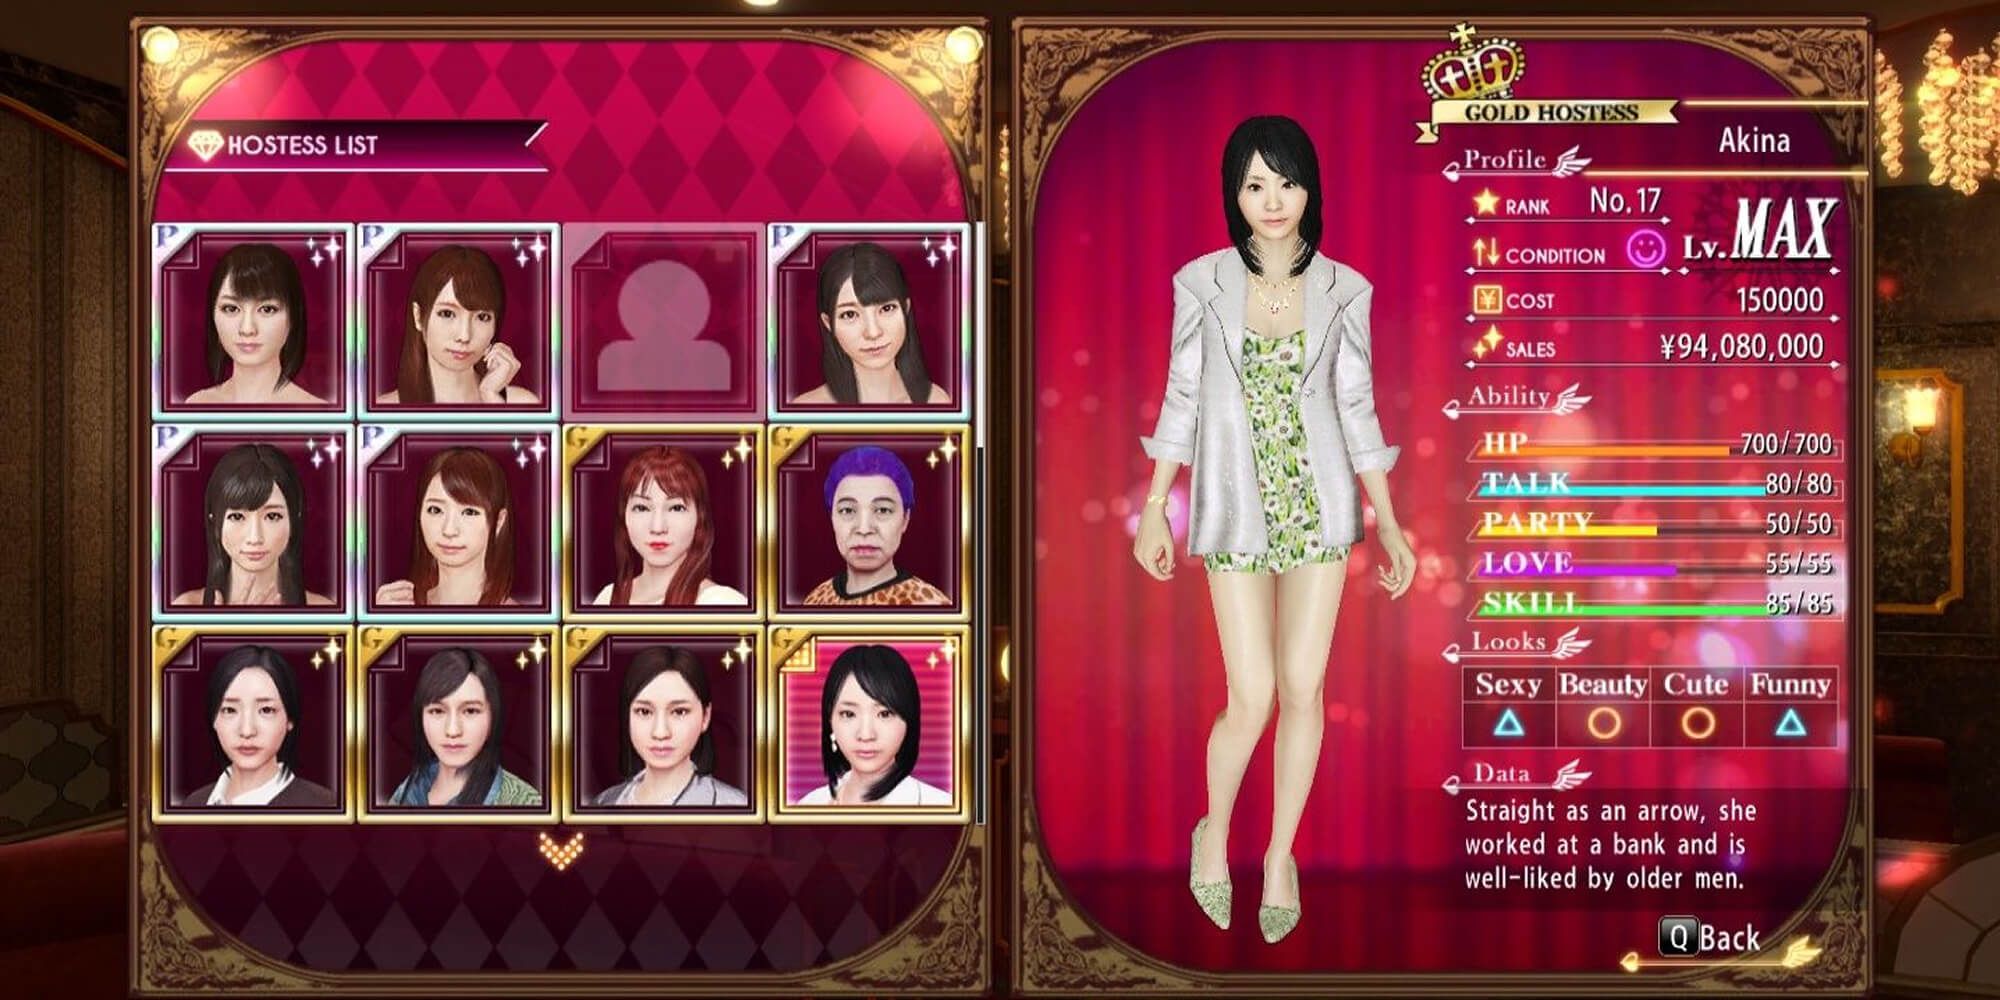 The Hostess Akina's Profile Page